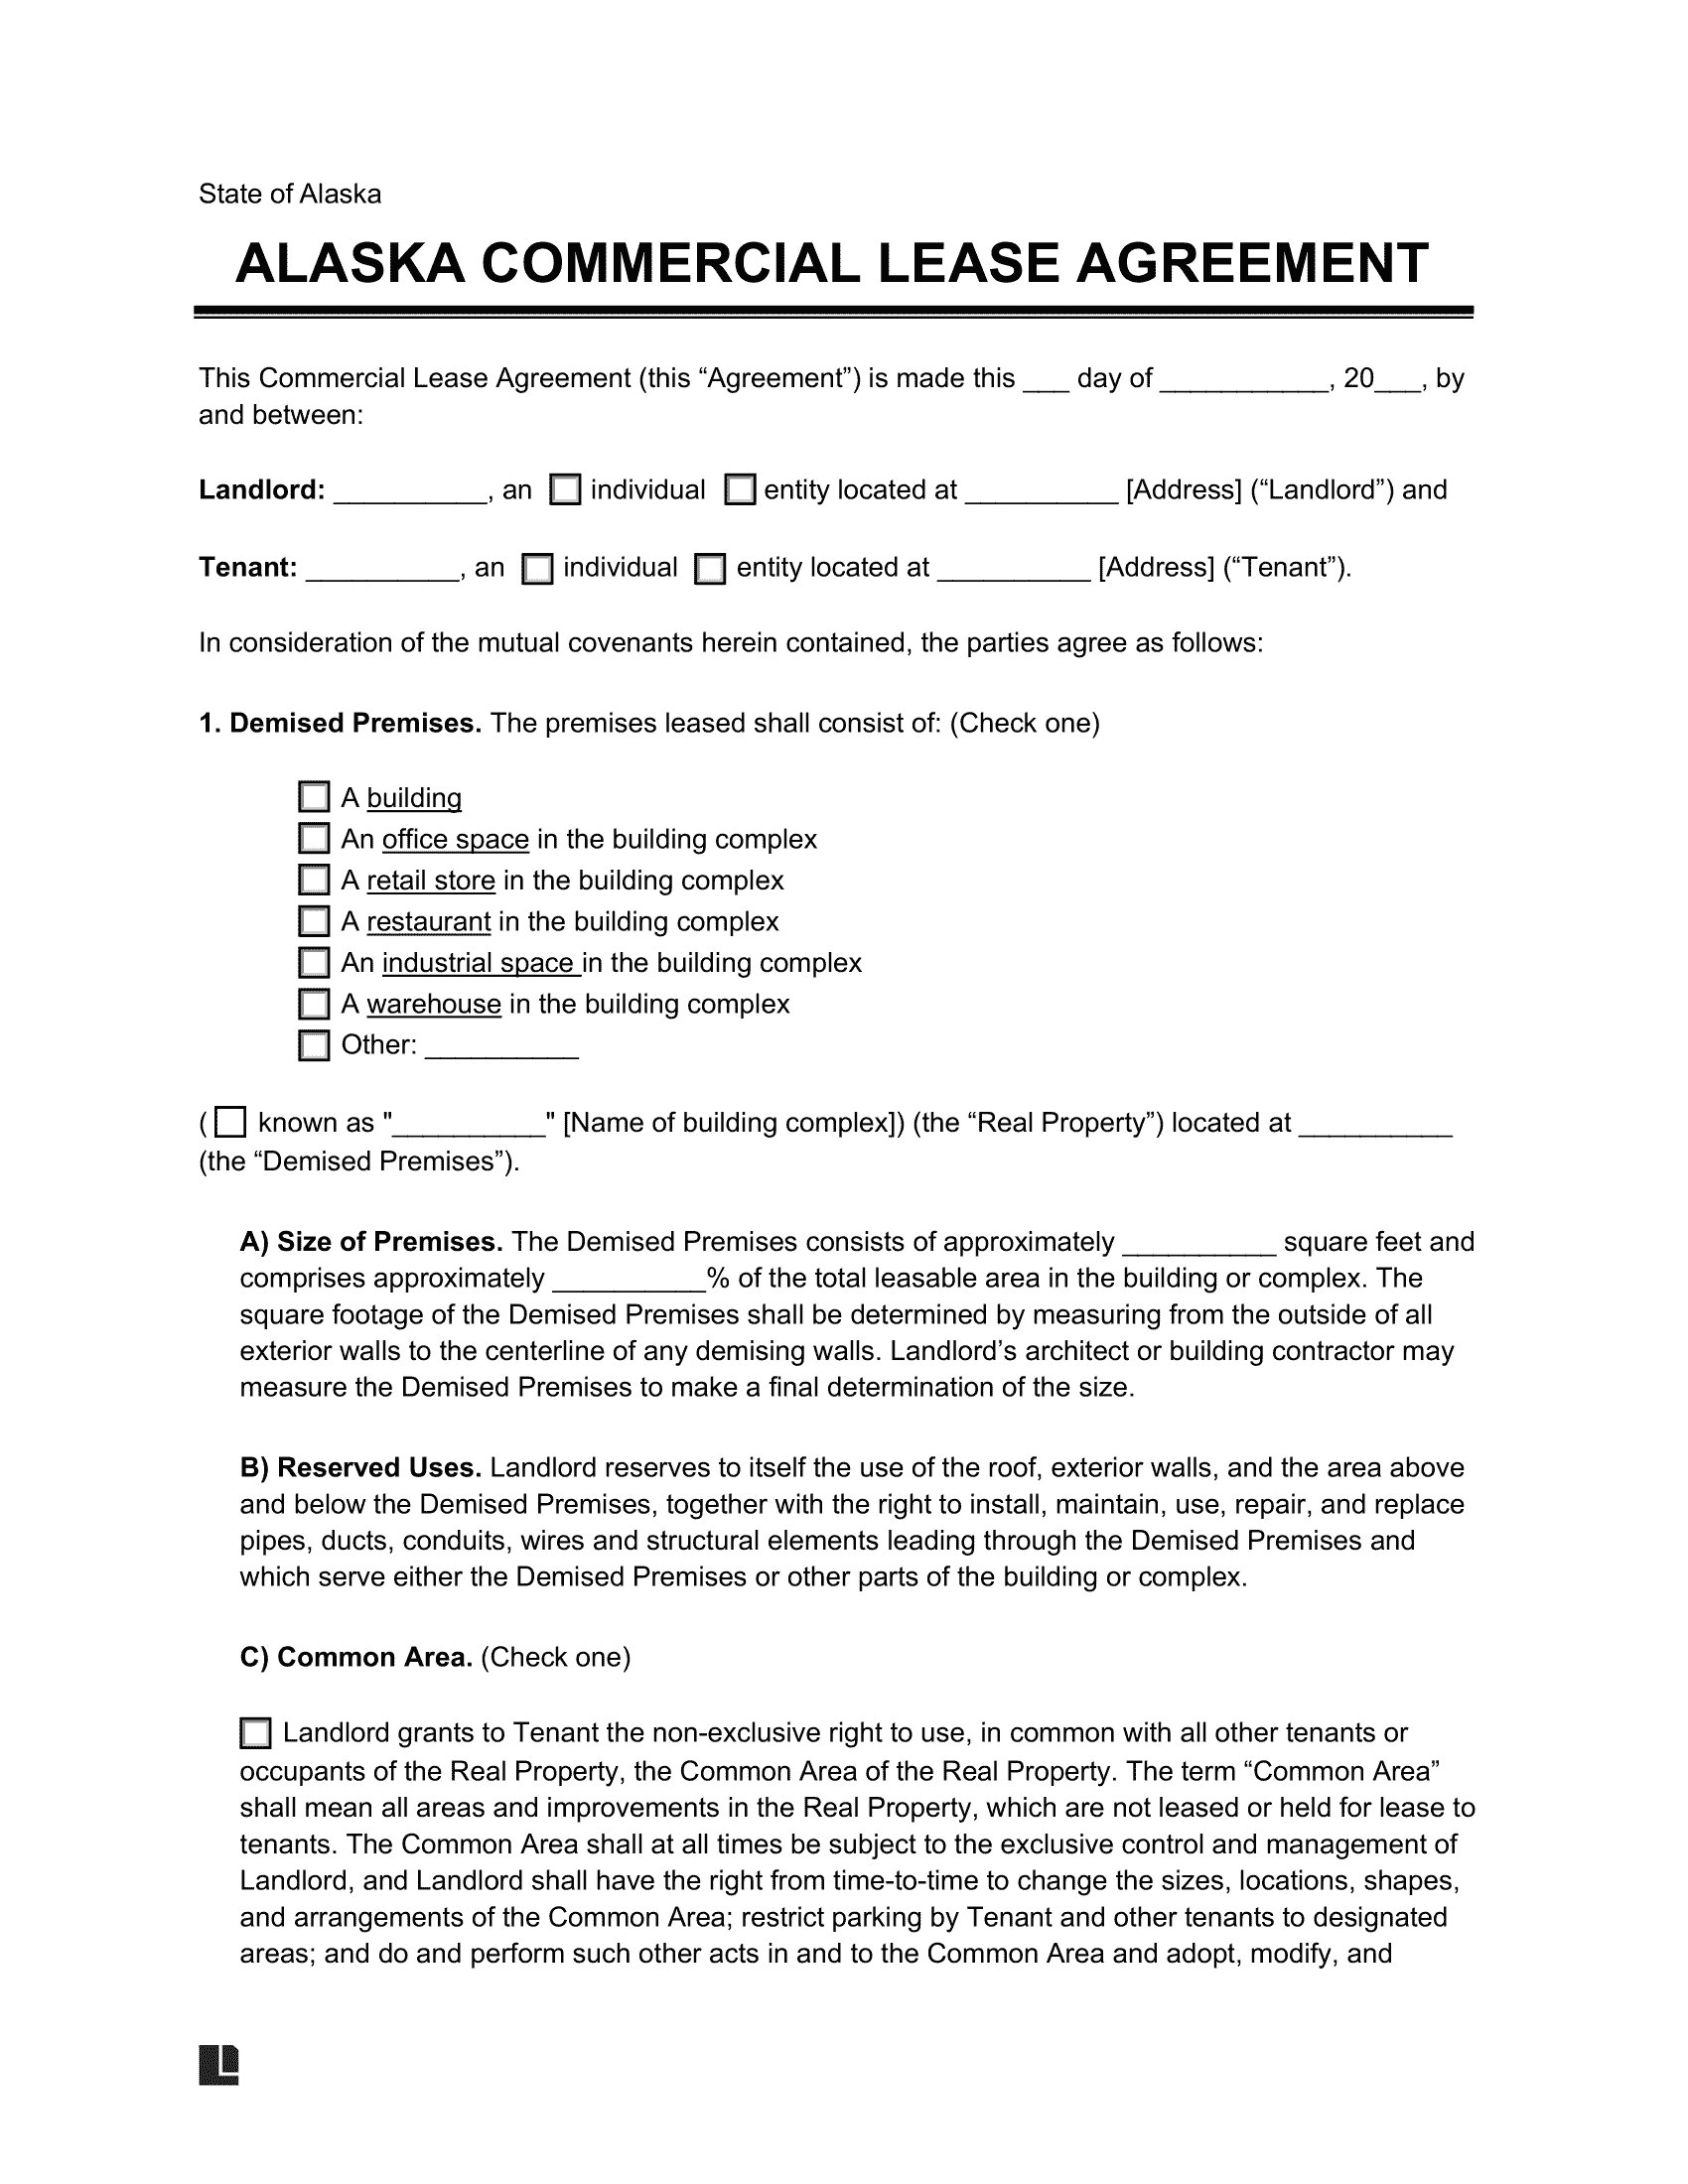 Alaska Commercial Lease Agreement